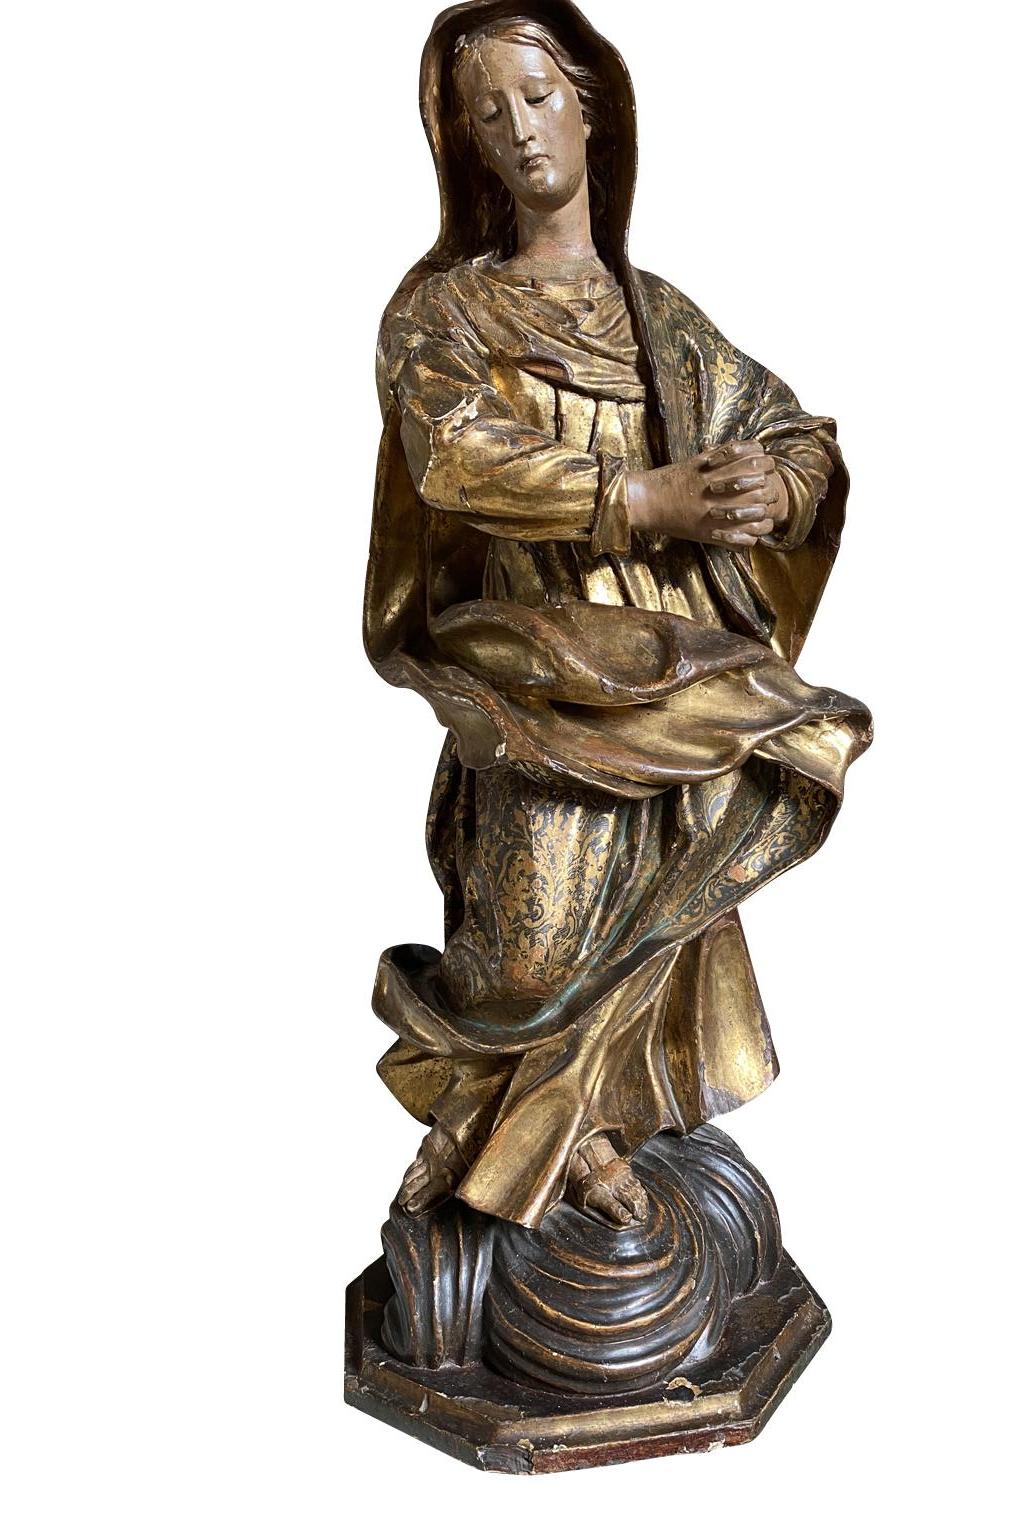 Polychromed 17th Century Italian Statue of the Madonna